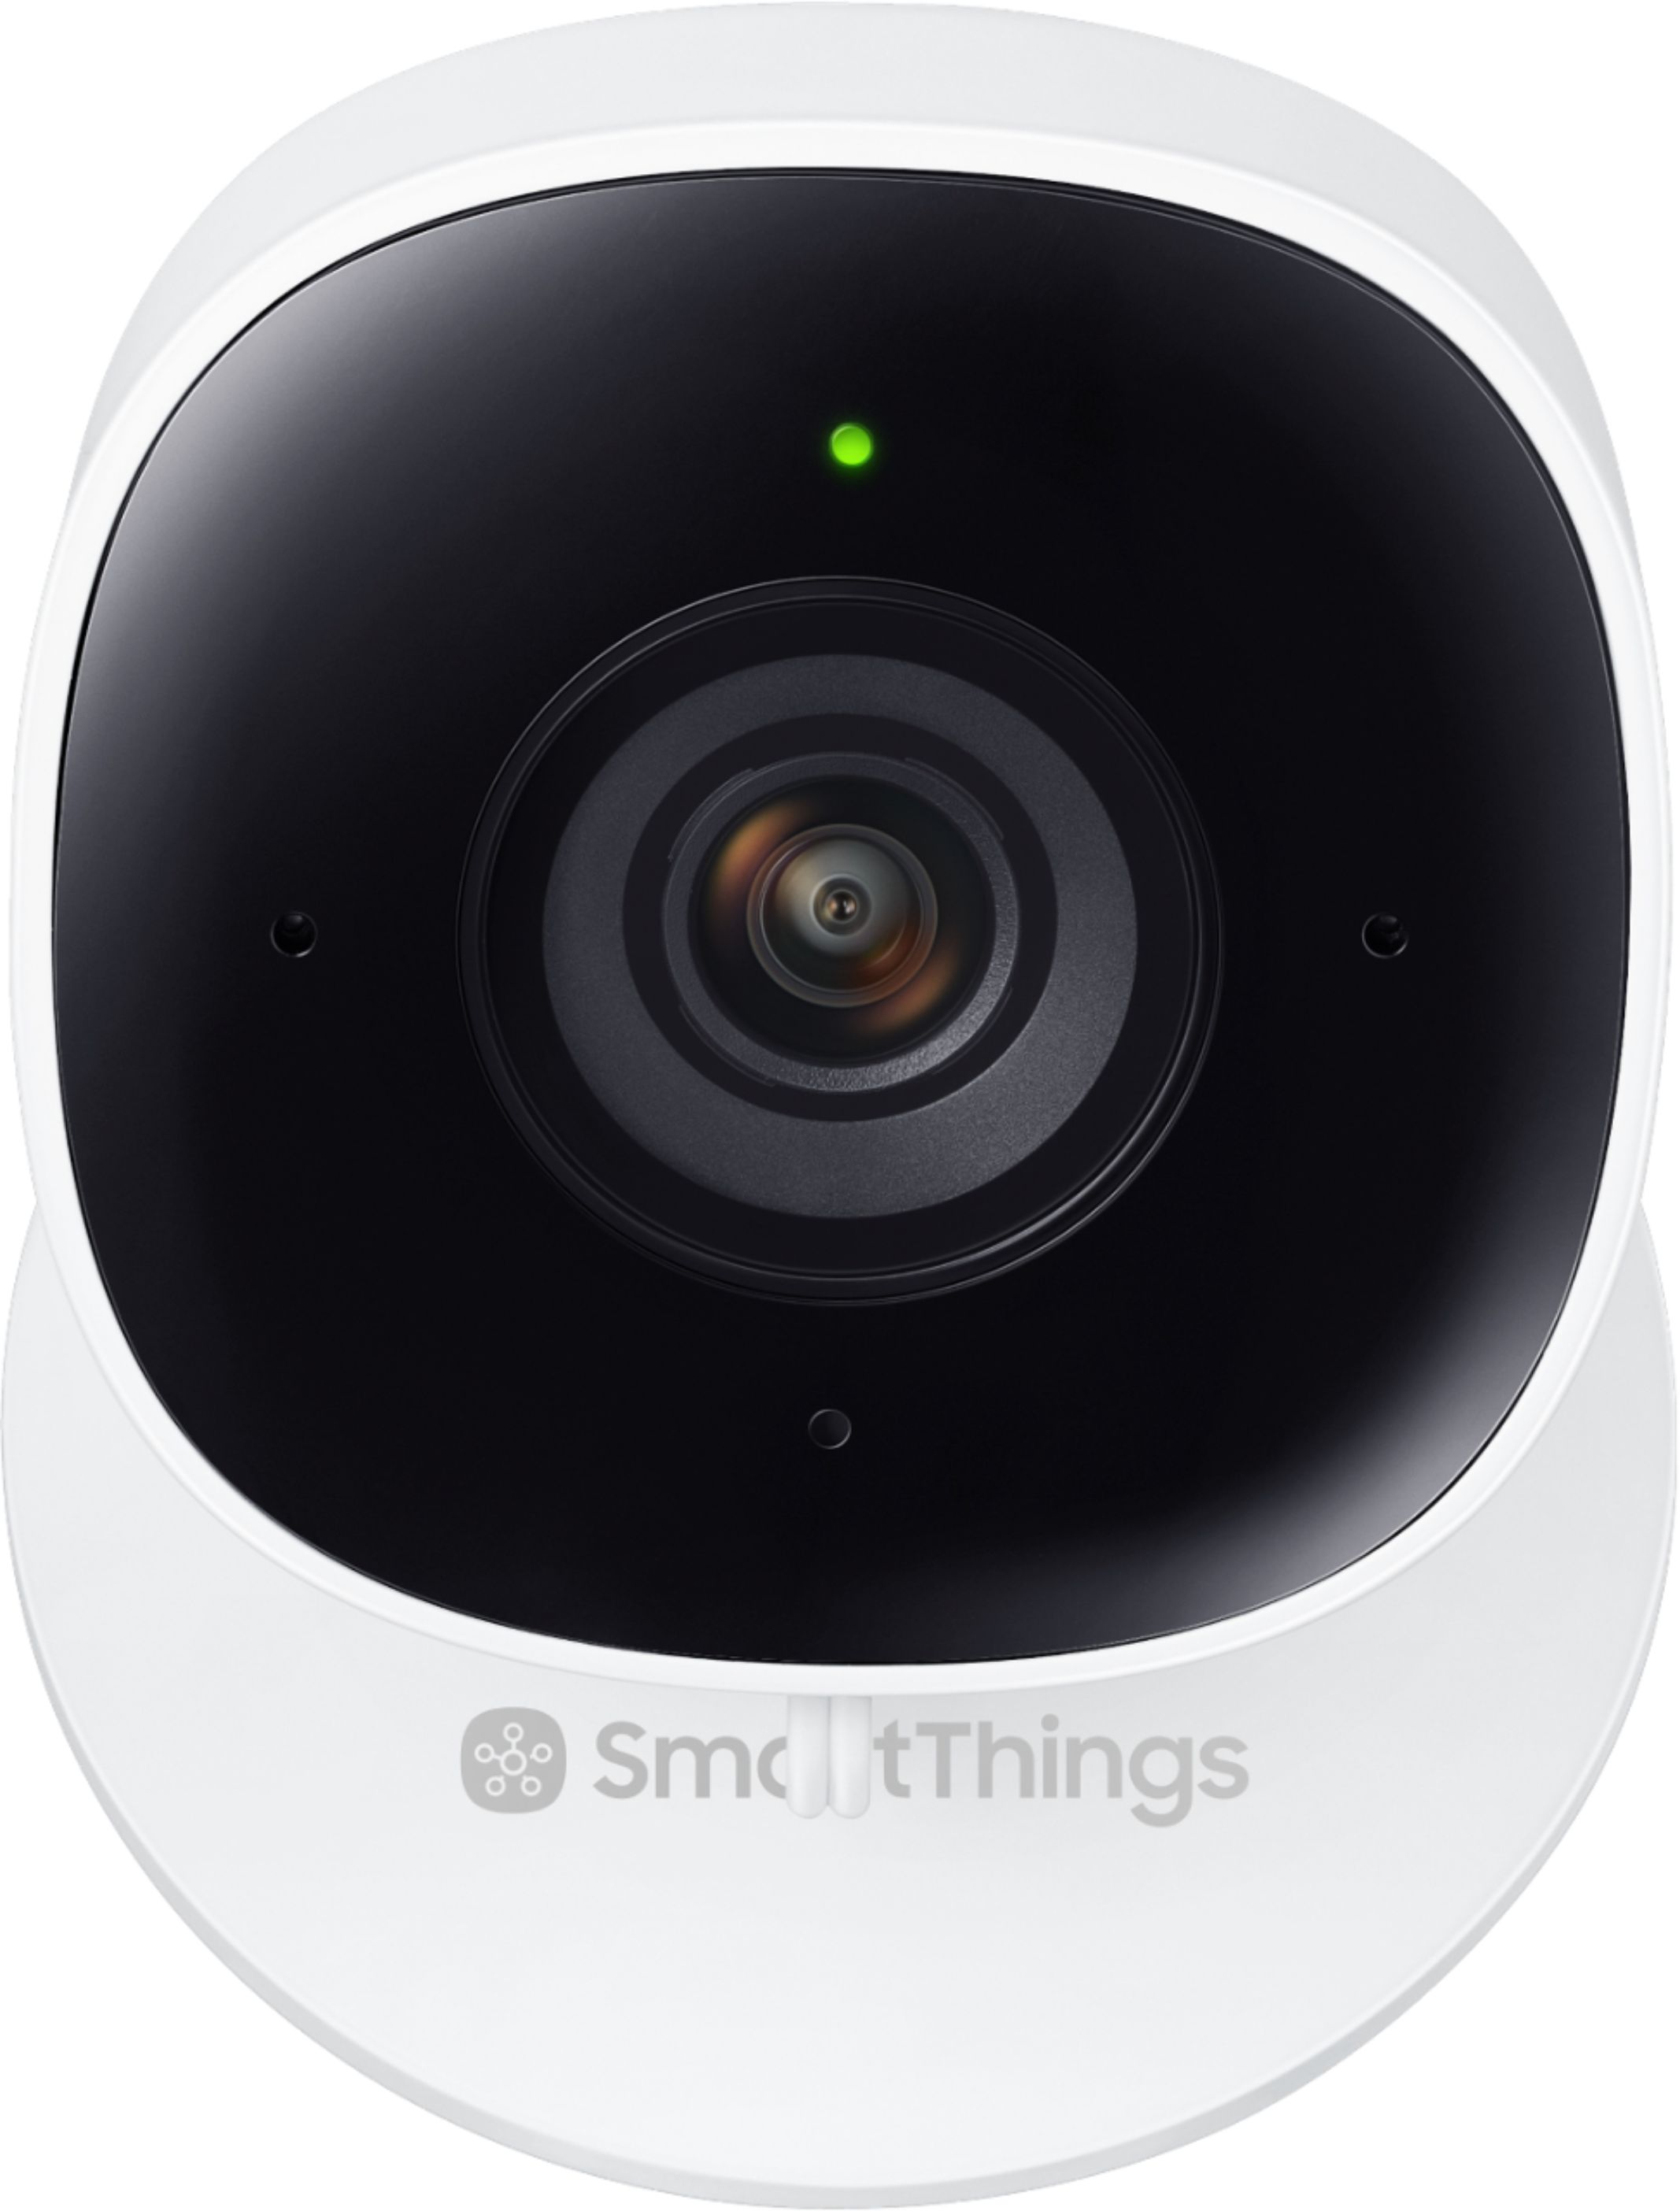 smartthings camera recording